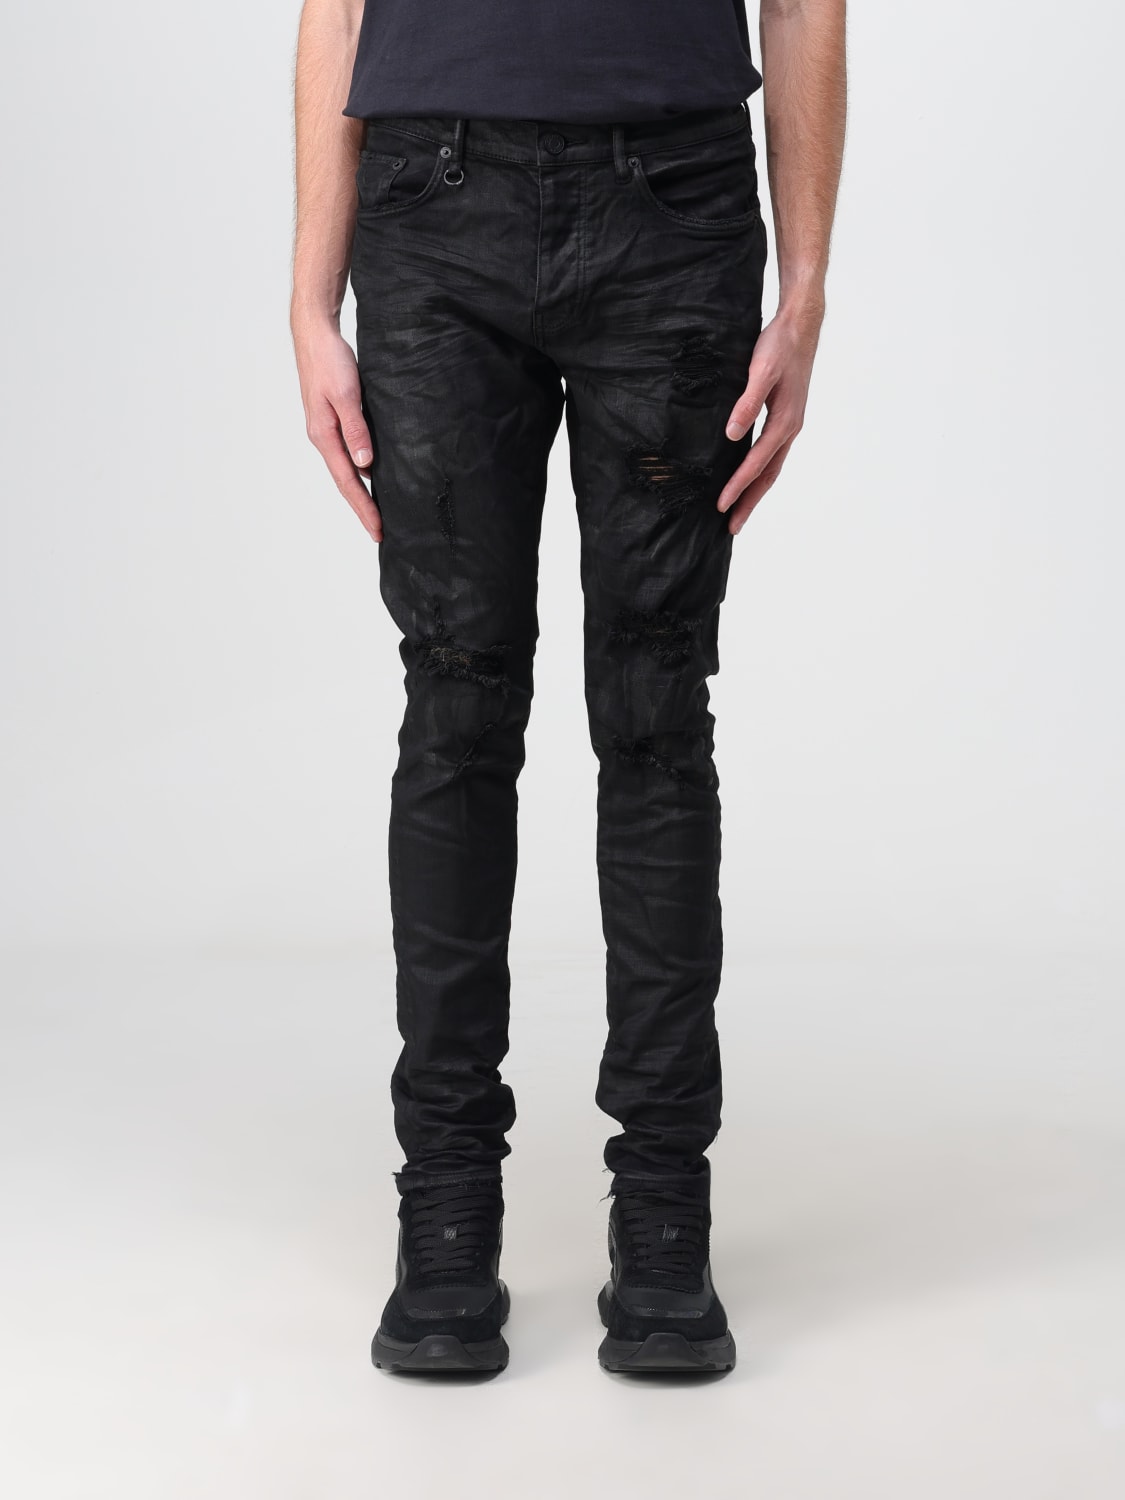 Black New Purple brand Men's hole personality fashion jeans SZ 29-38 -  Helia Beer Co